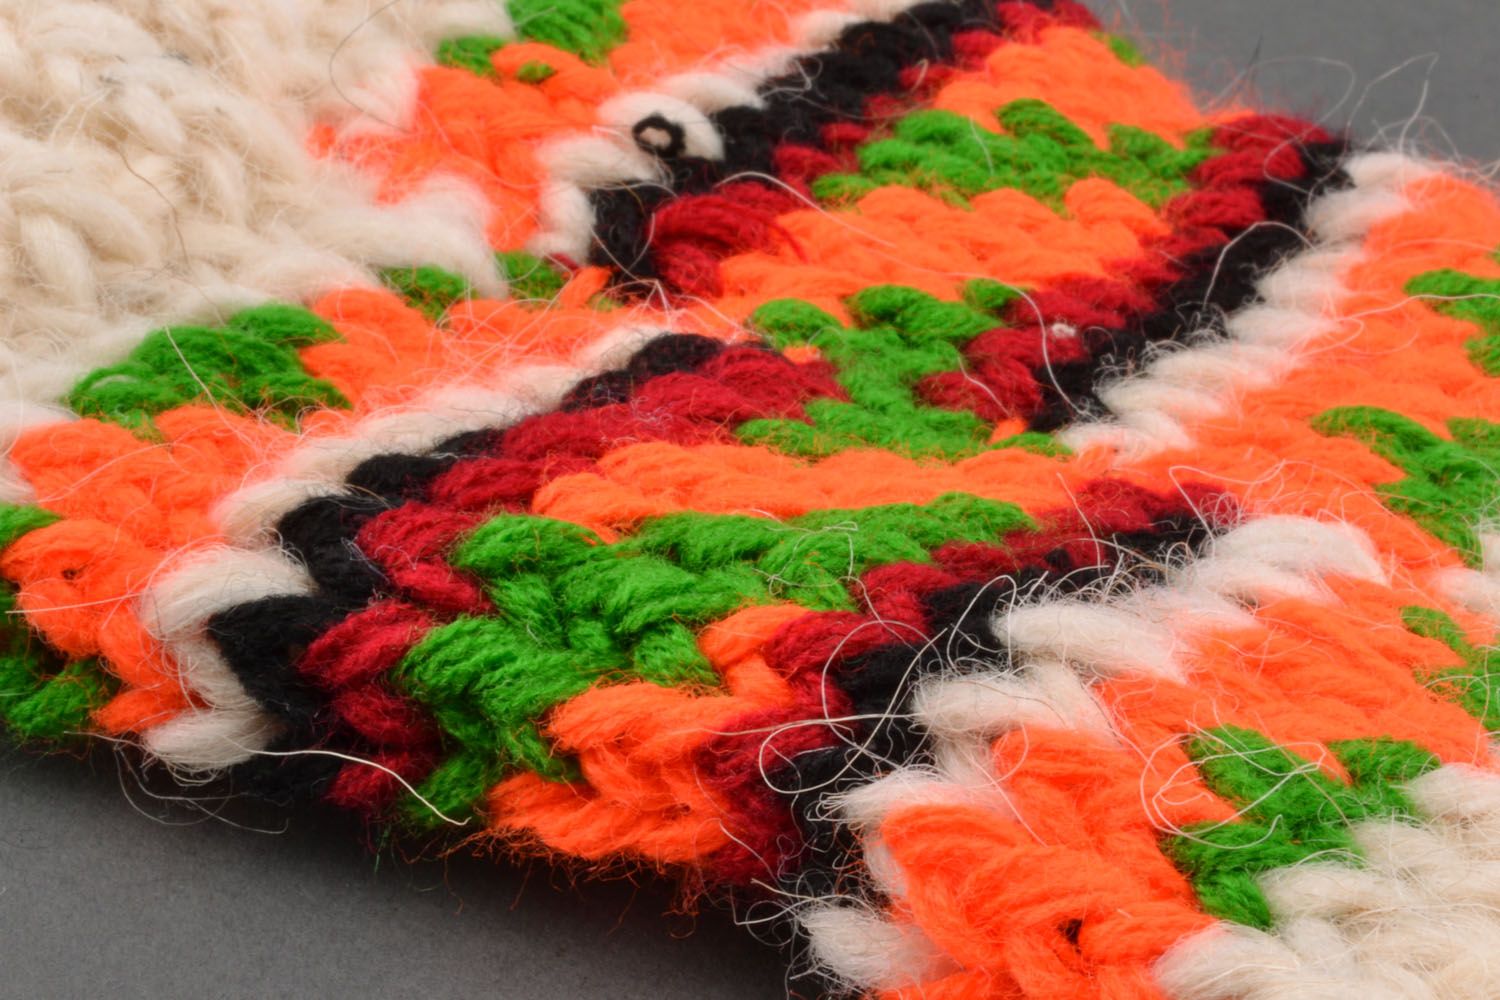 Homemade knitted woolen socks photo 3